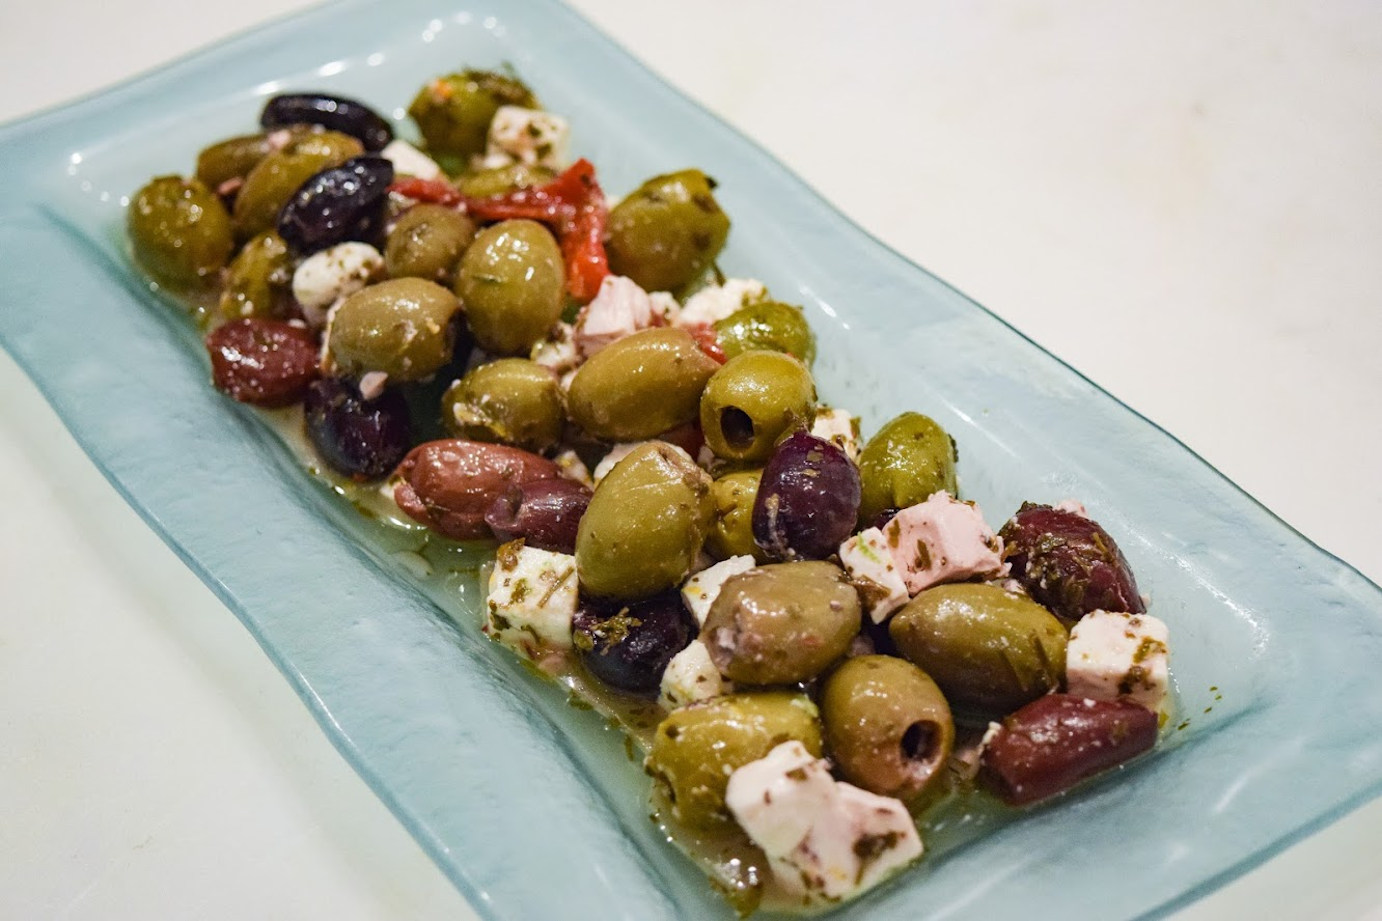 Mixed olive salad